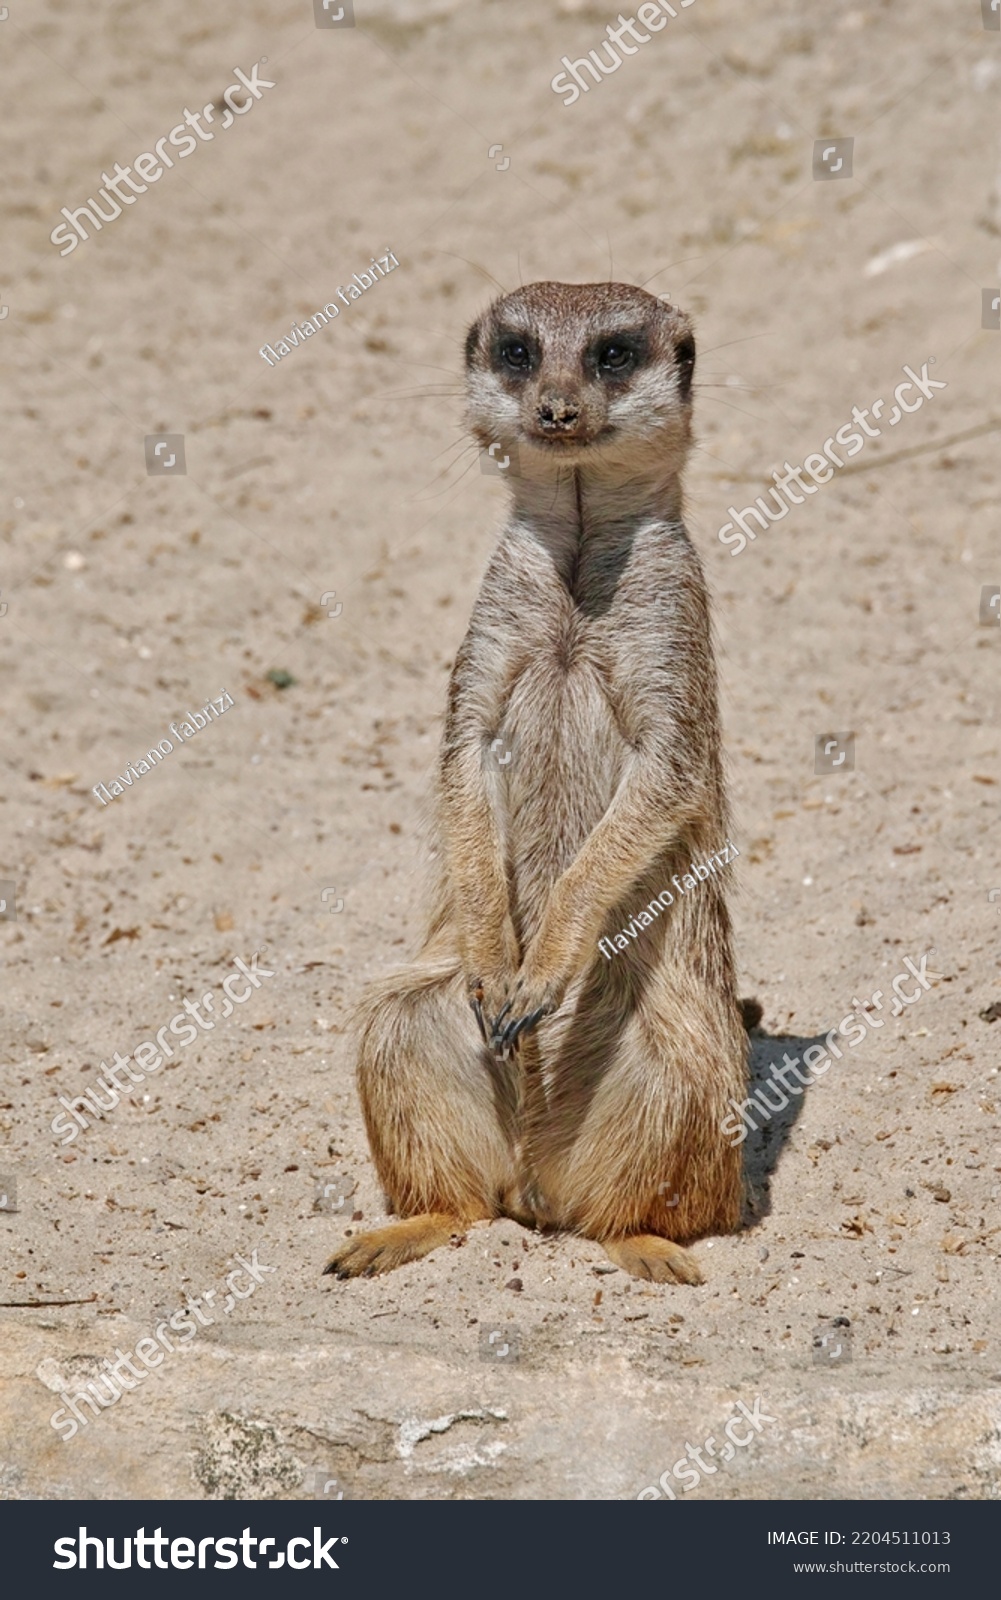 specimen of meerkat or suricate, Suricata suricatta; Herpestidae #2204511013